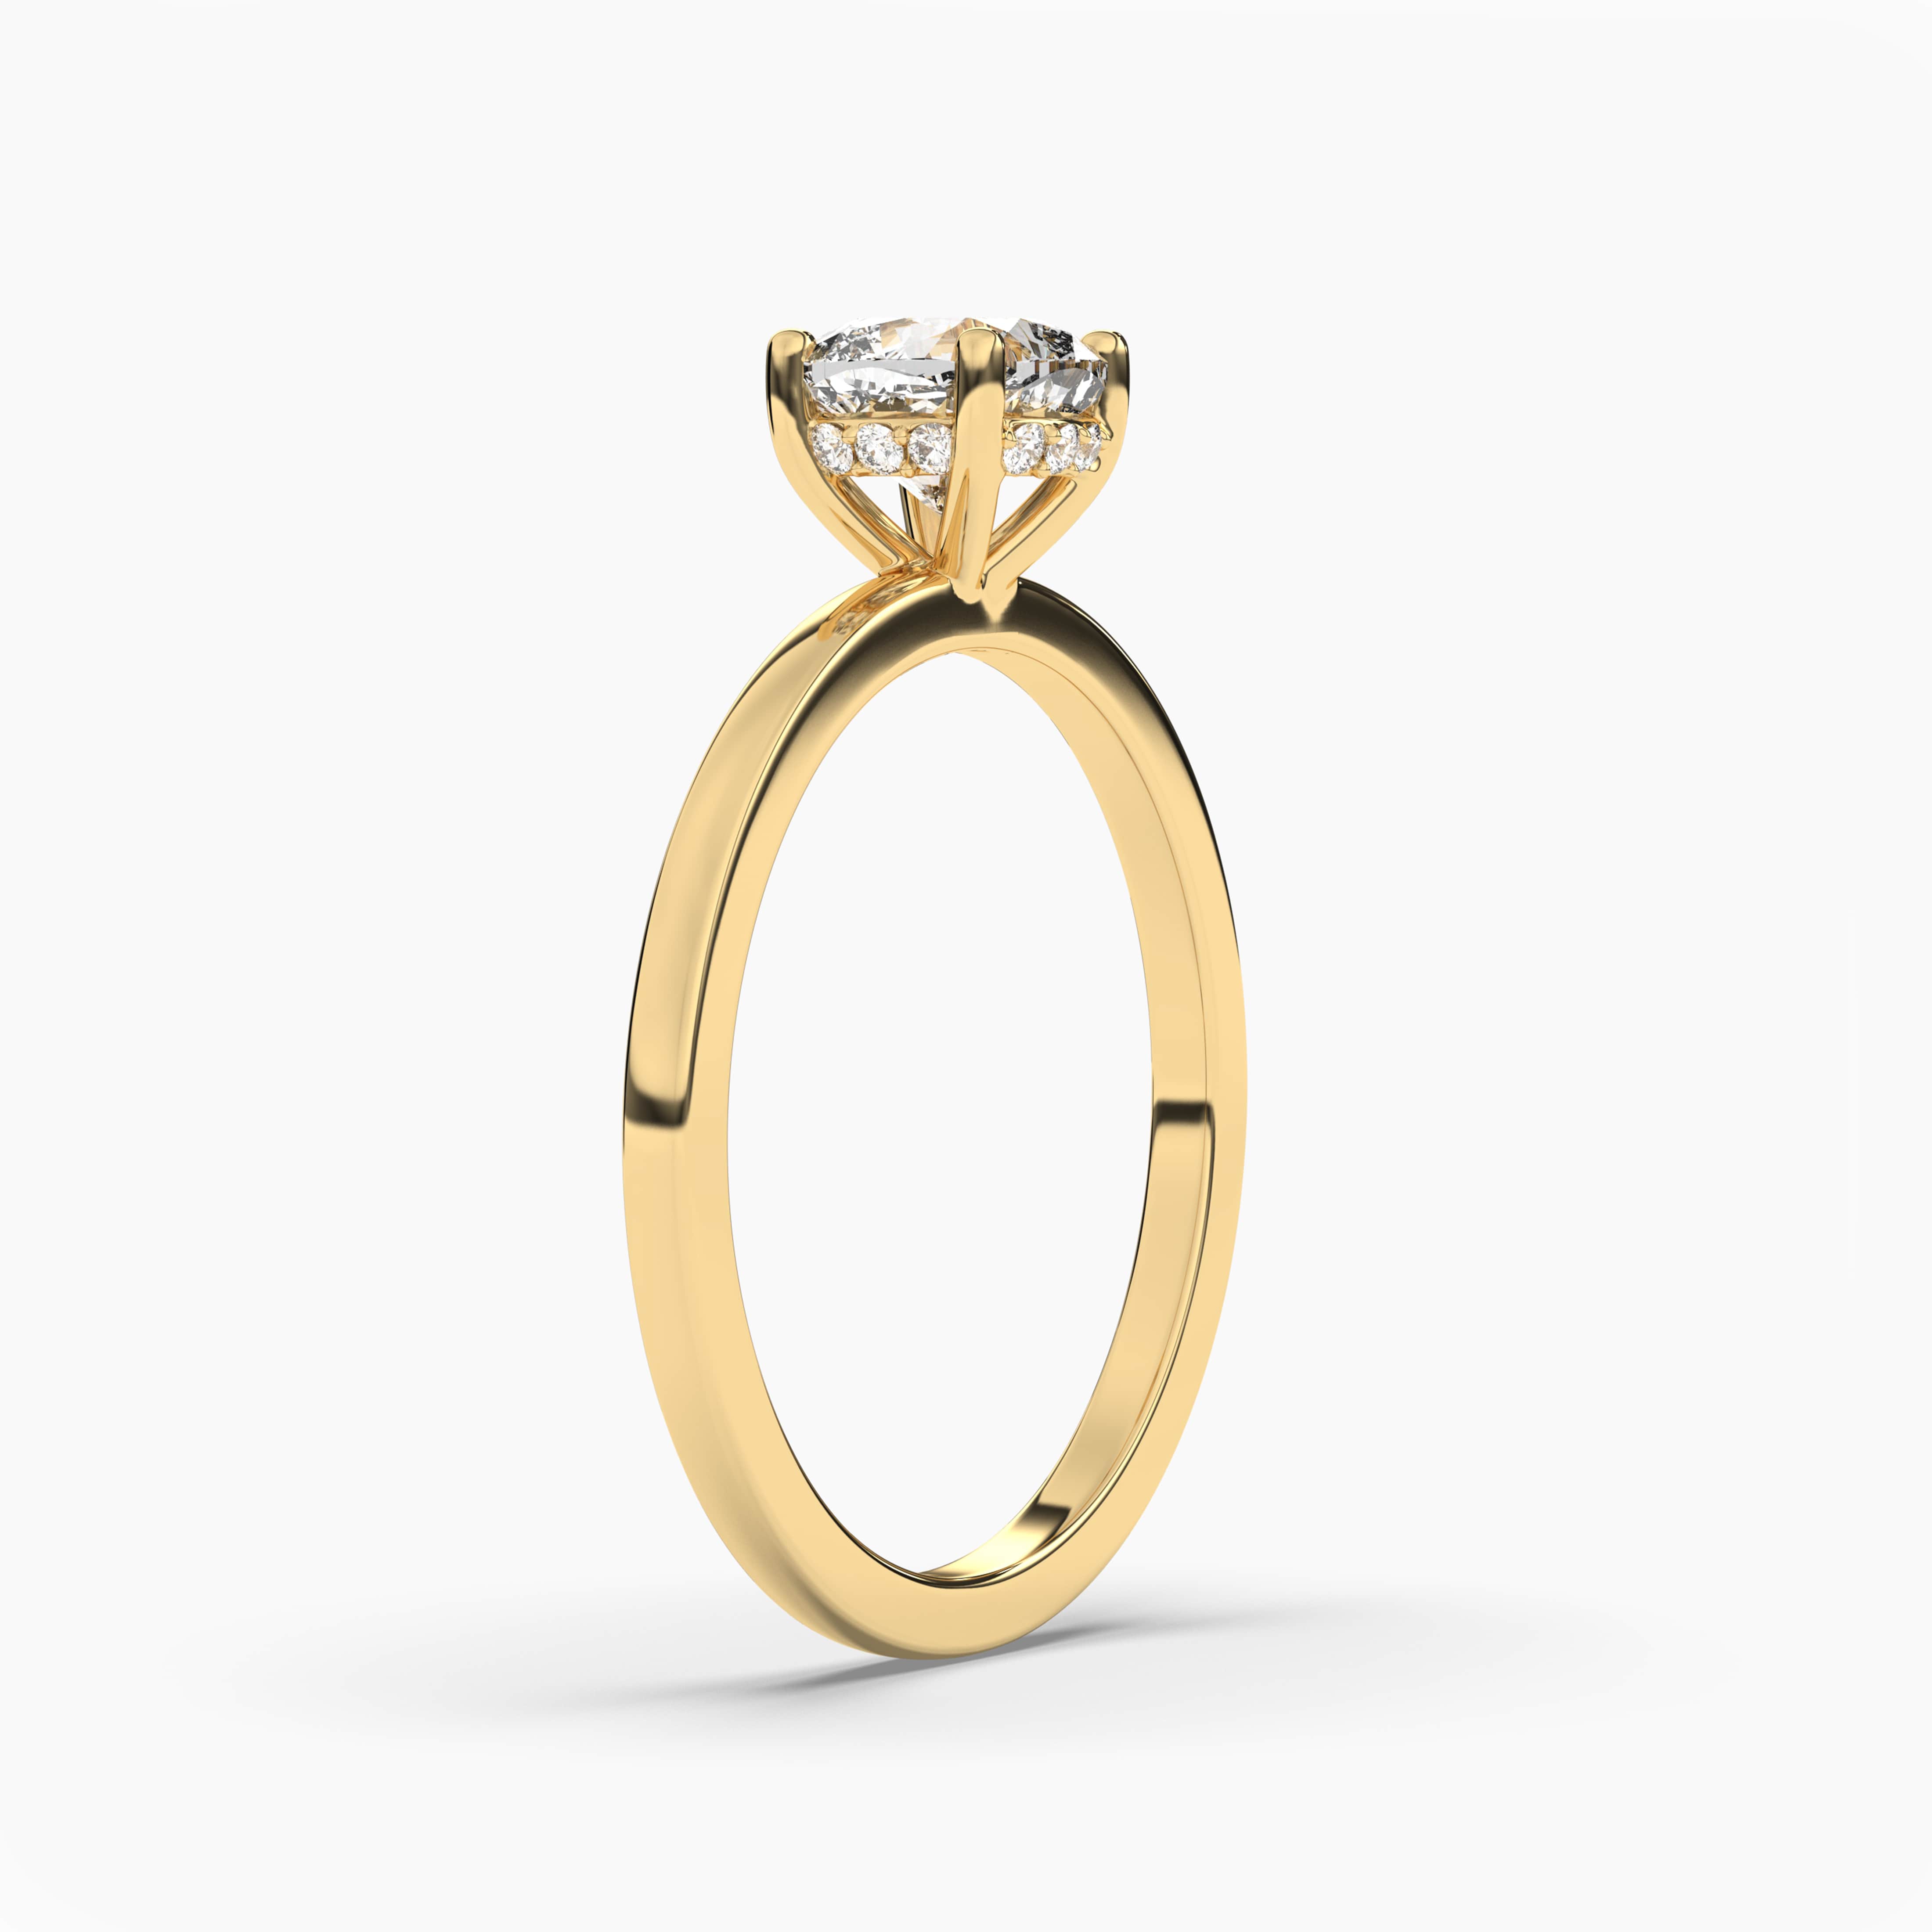 cushion cut diamond engagement ring with hidden halo